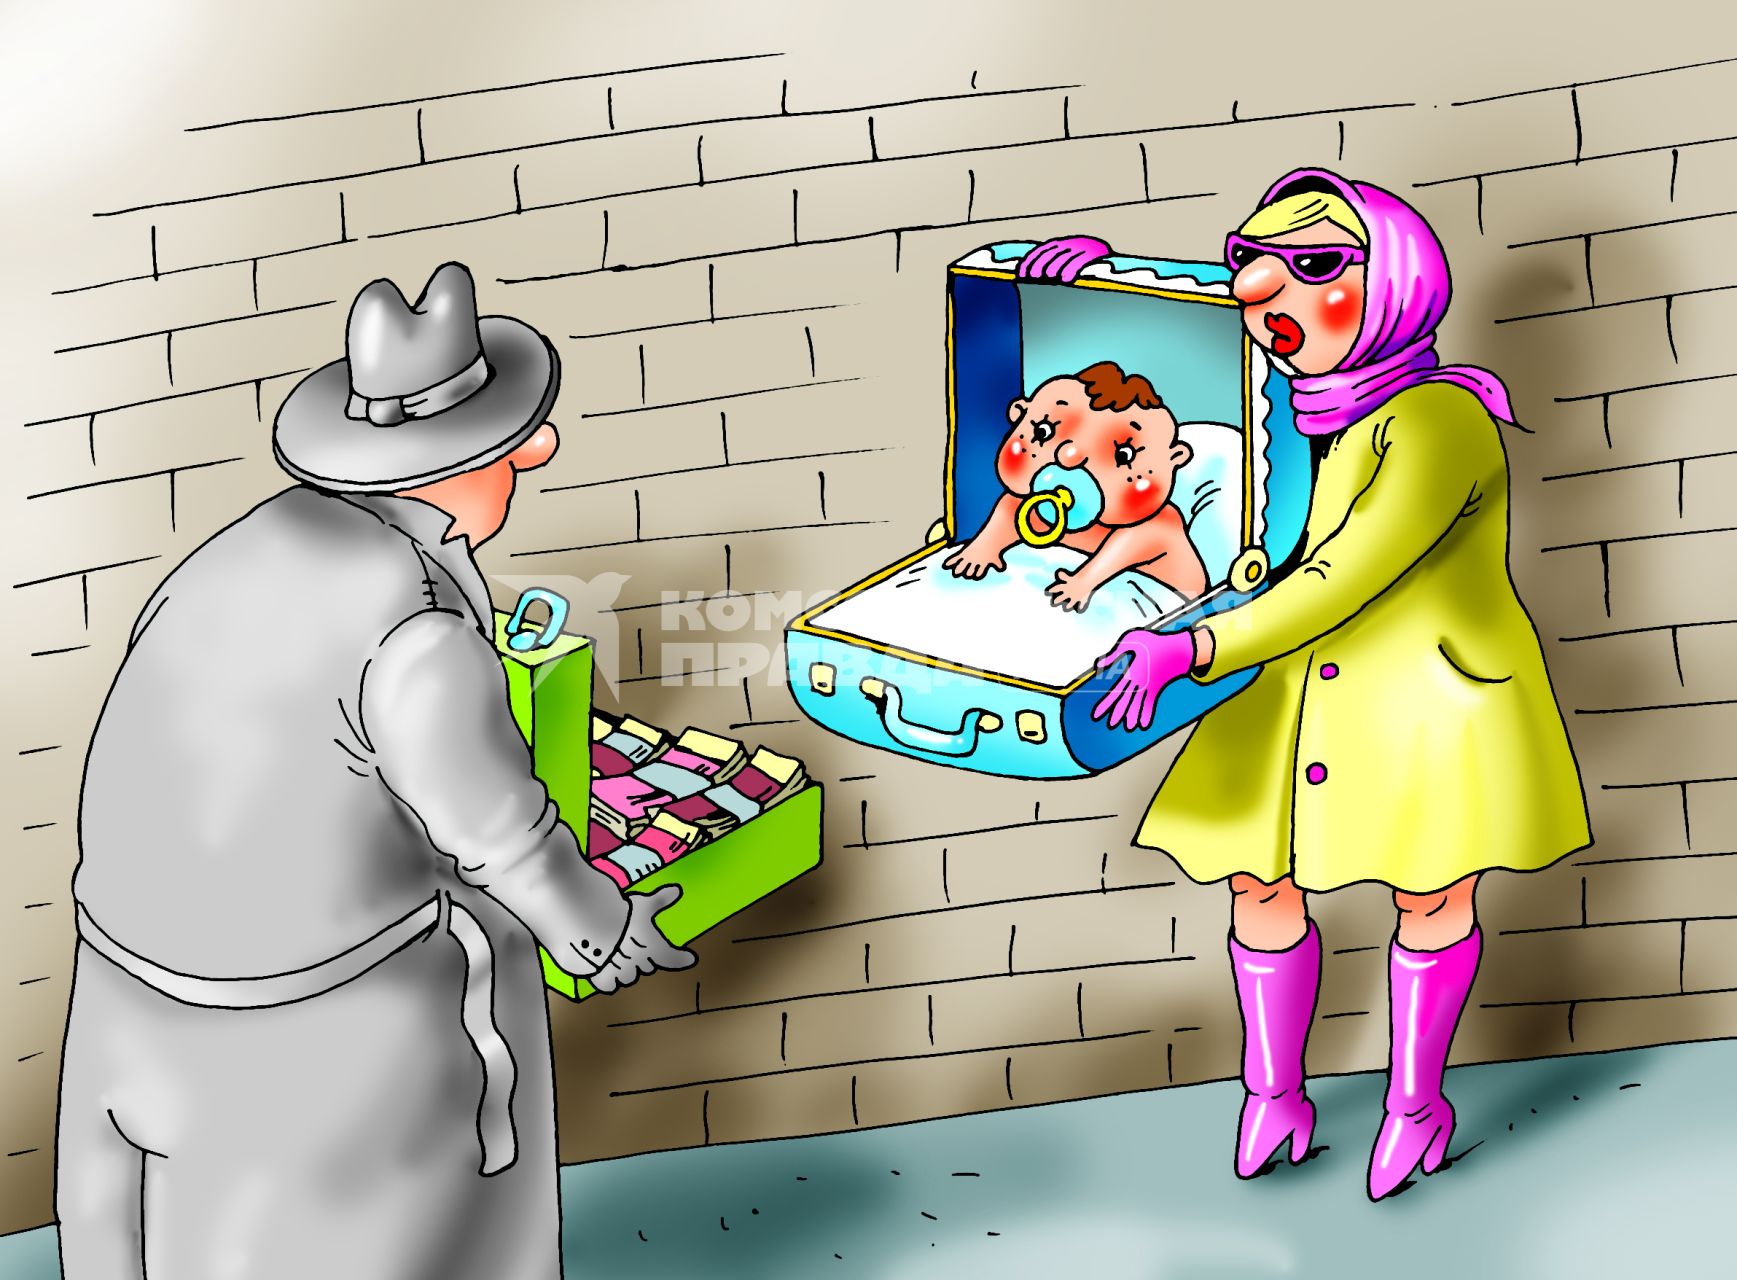 Карикатура на тему материнского капитала.